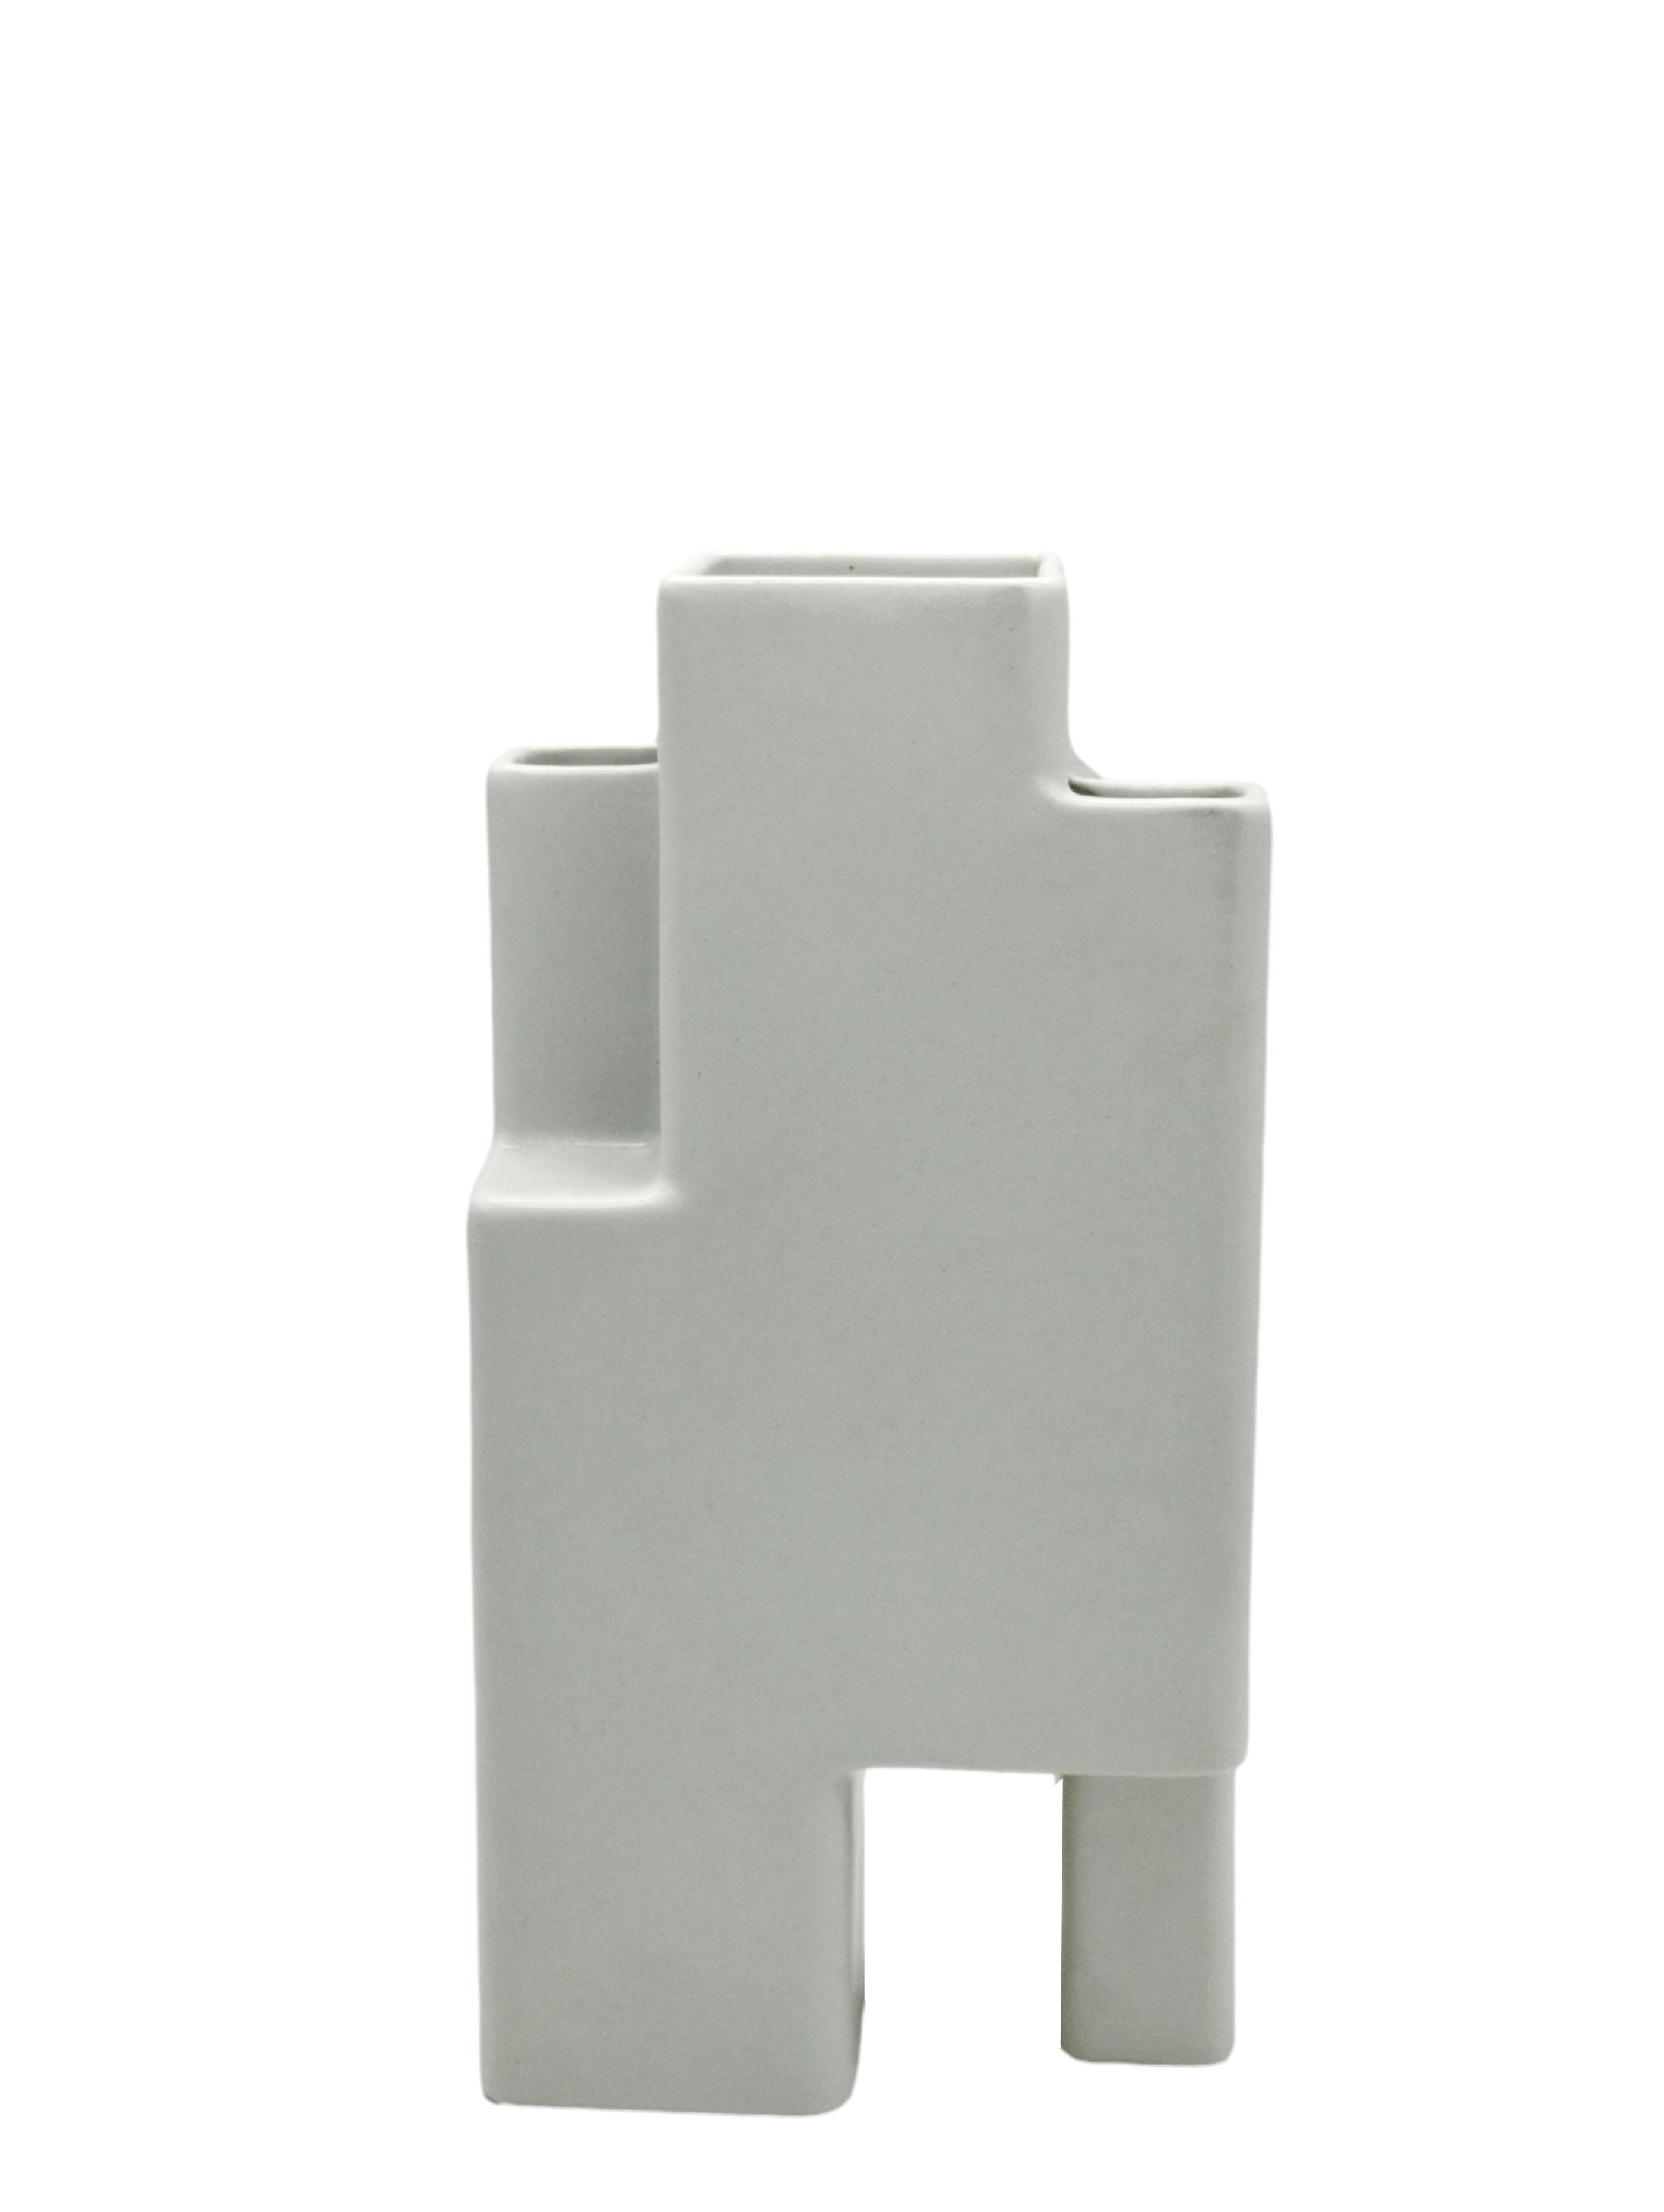 Mid-Century Modern Pierre Cardin for Franco Pozzi Attrib. White Geometric Ceramic Vase, Italy 1970s For Sale